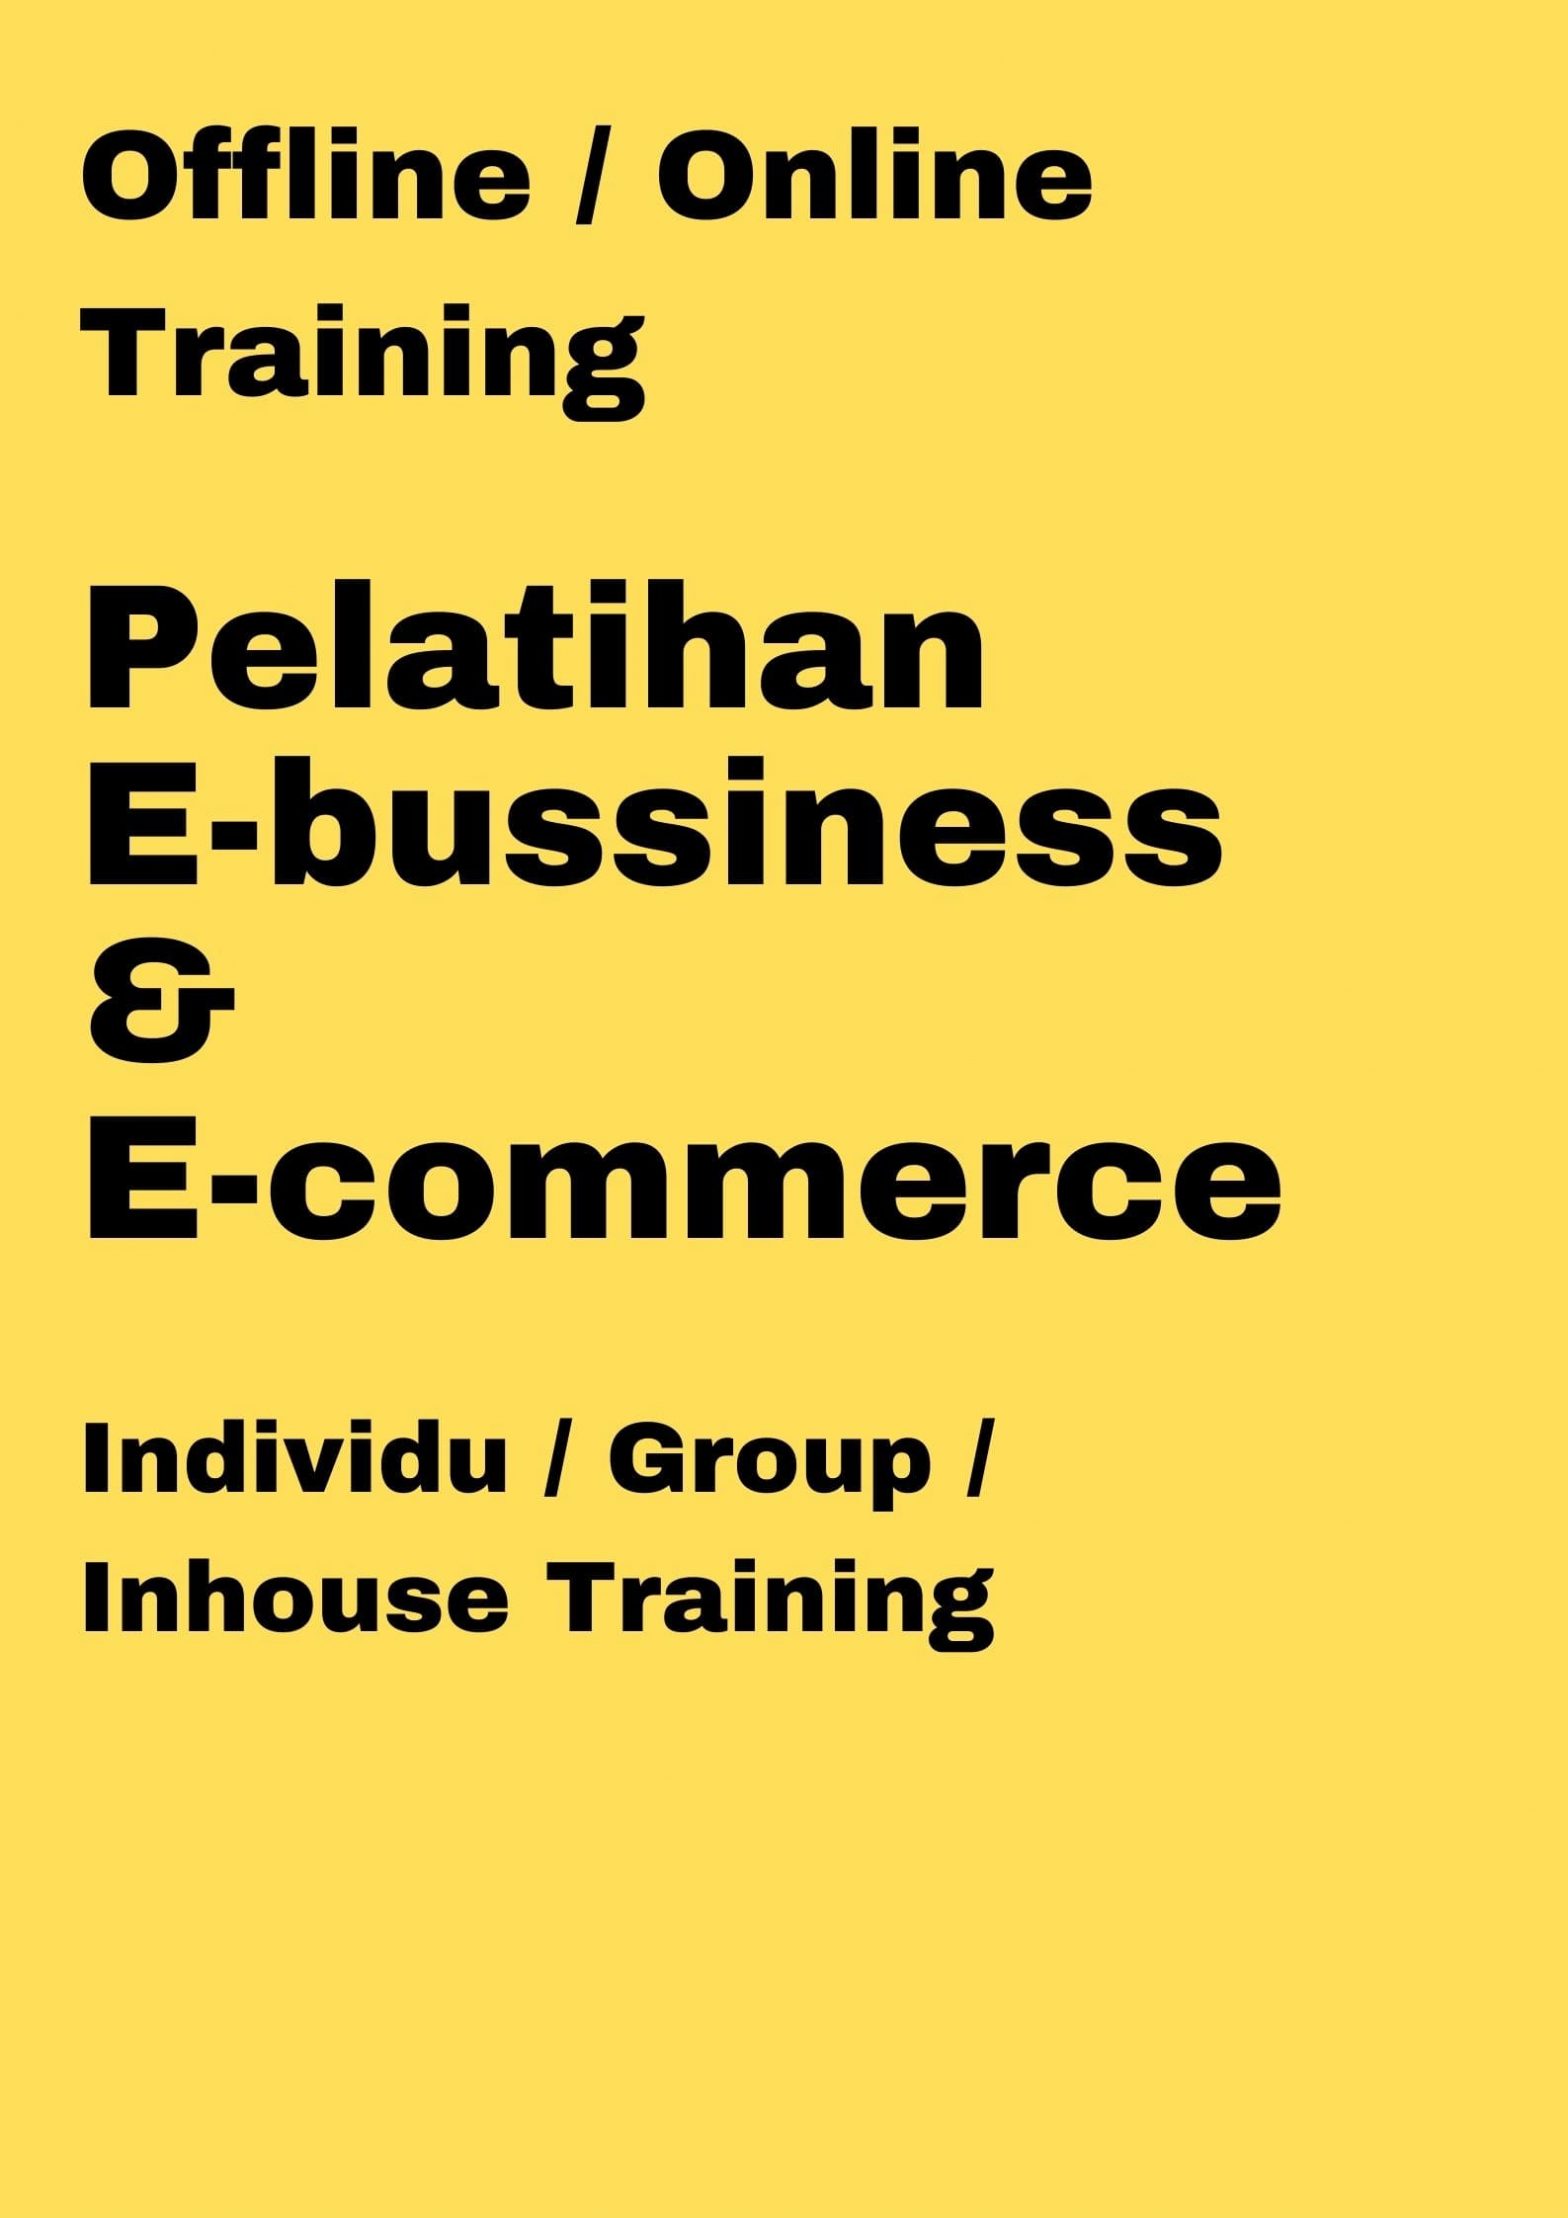 pelatihan E-bussiness & E-commerce online